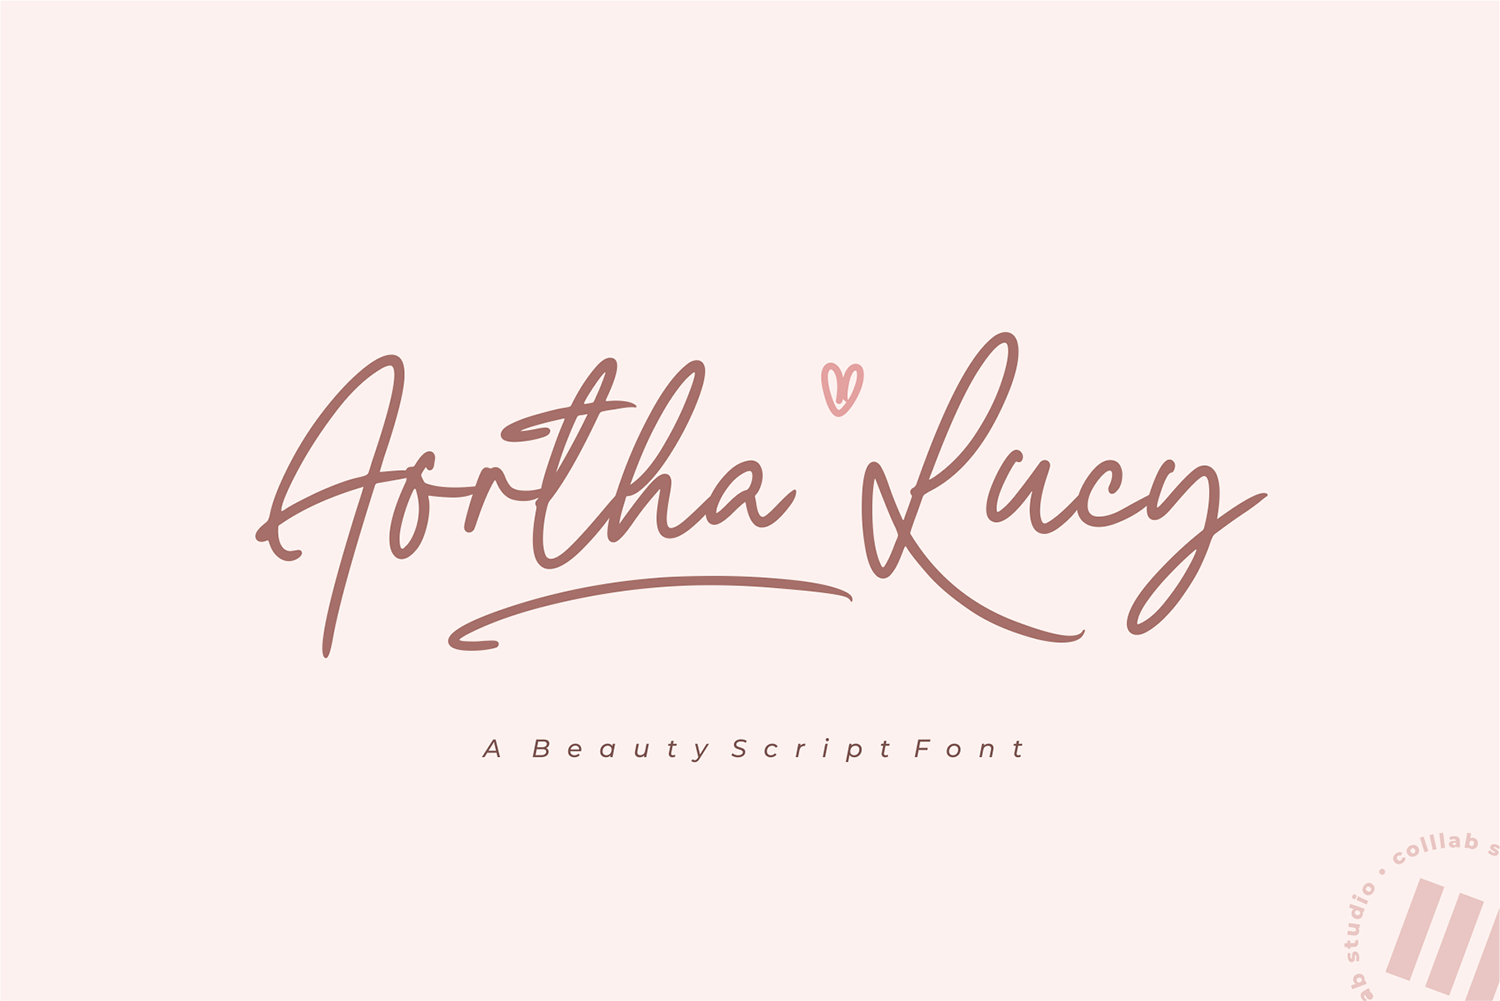 Aortha Lucy Free Font